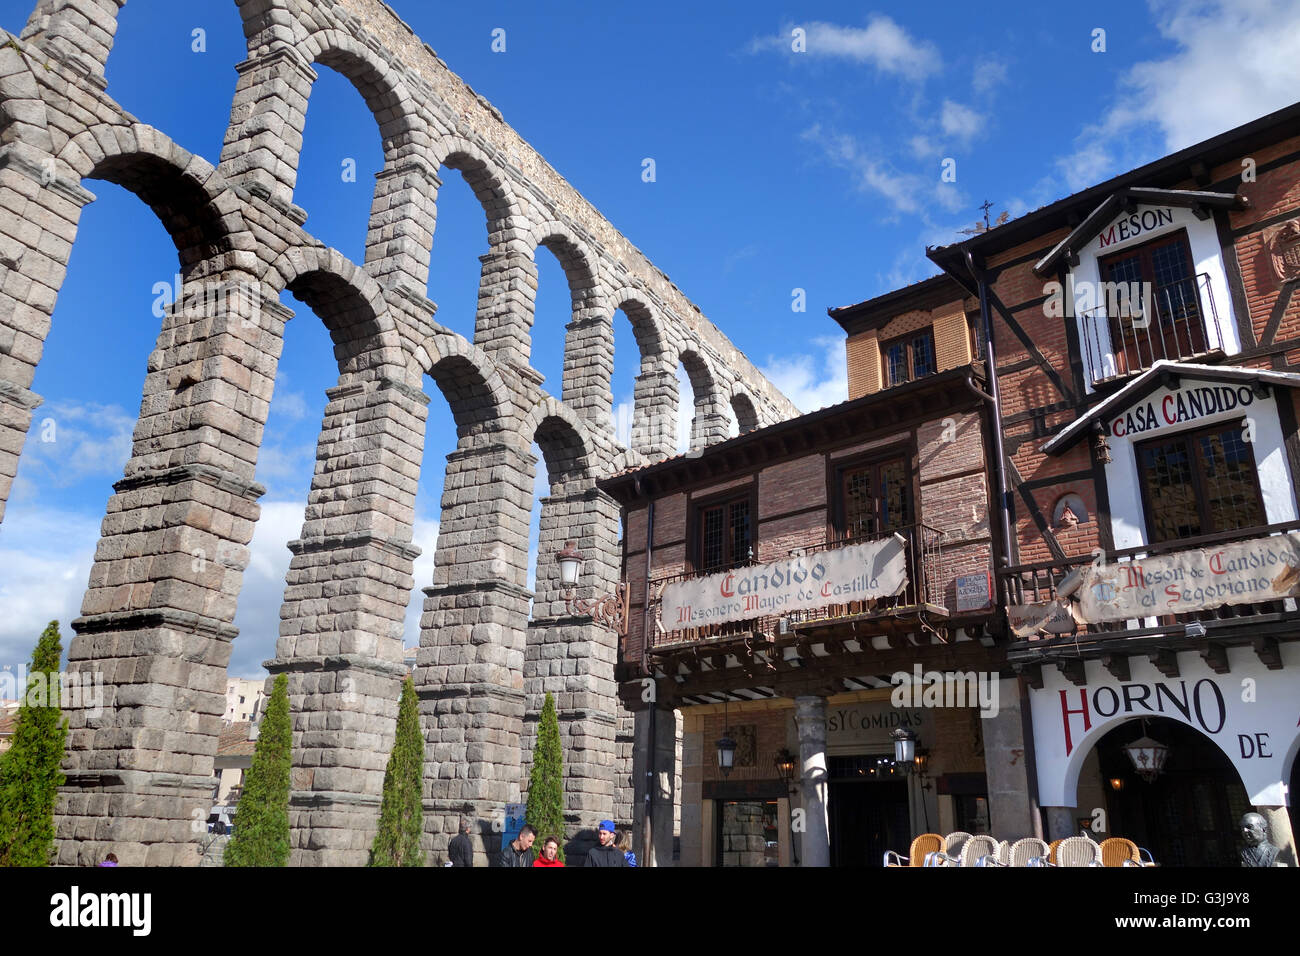 Roman Aqueduct and Meson de Candido restaurant in Segovia Spain Stock Photo  - Alamy